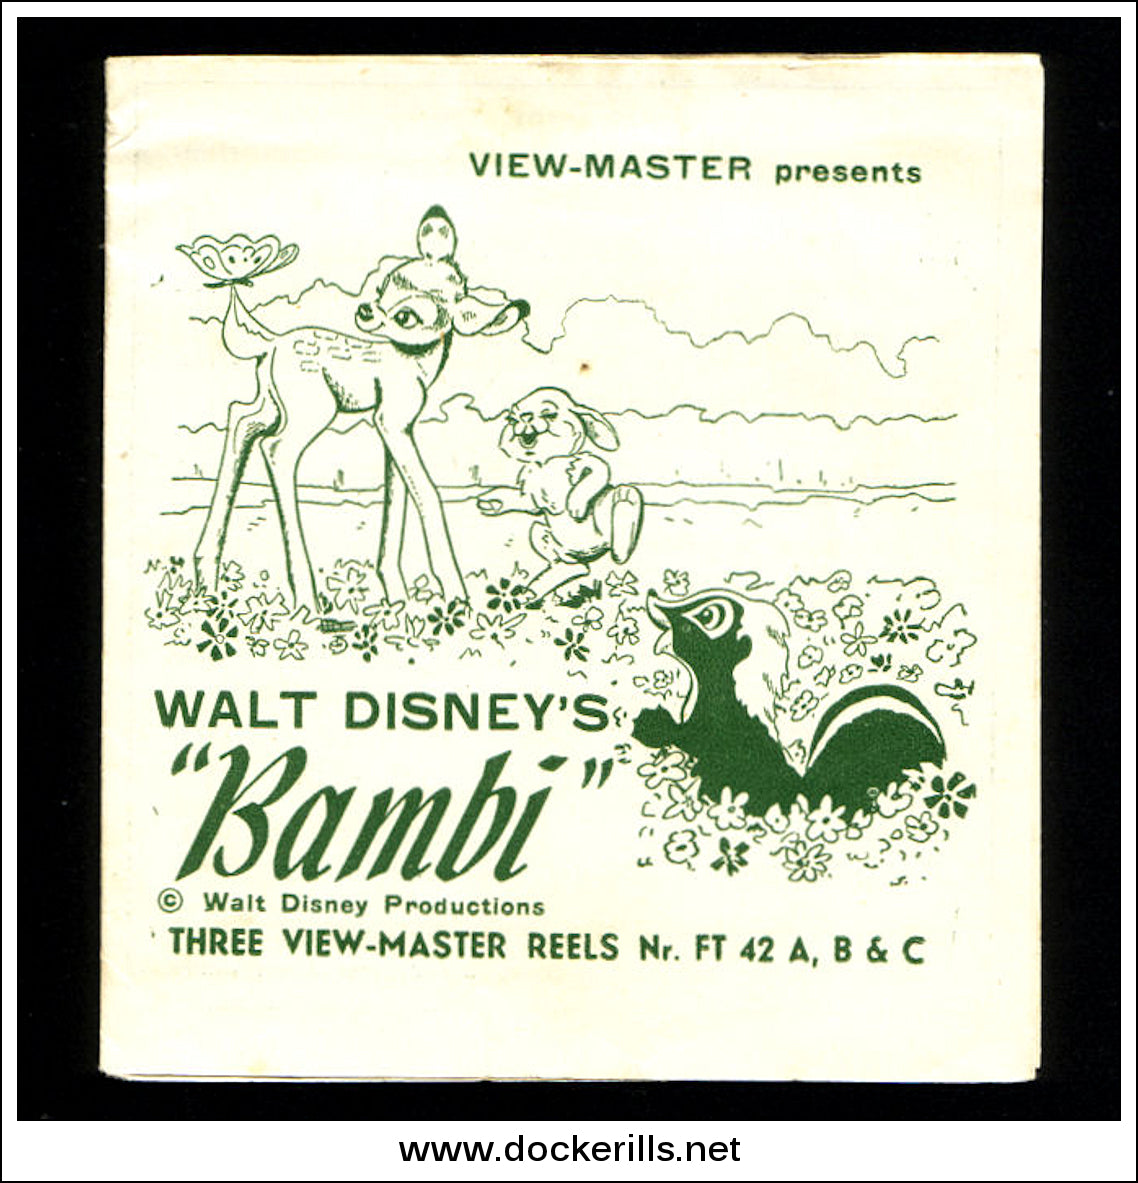 View-Master Reels - Walt Disney's Bambi. Three View-Master Reels